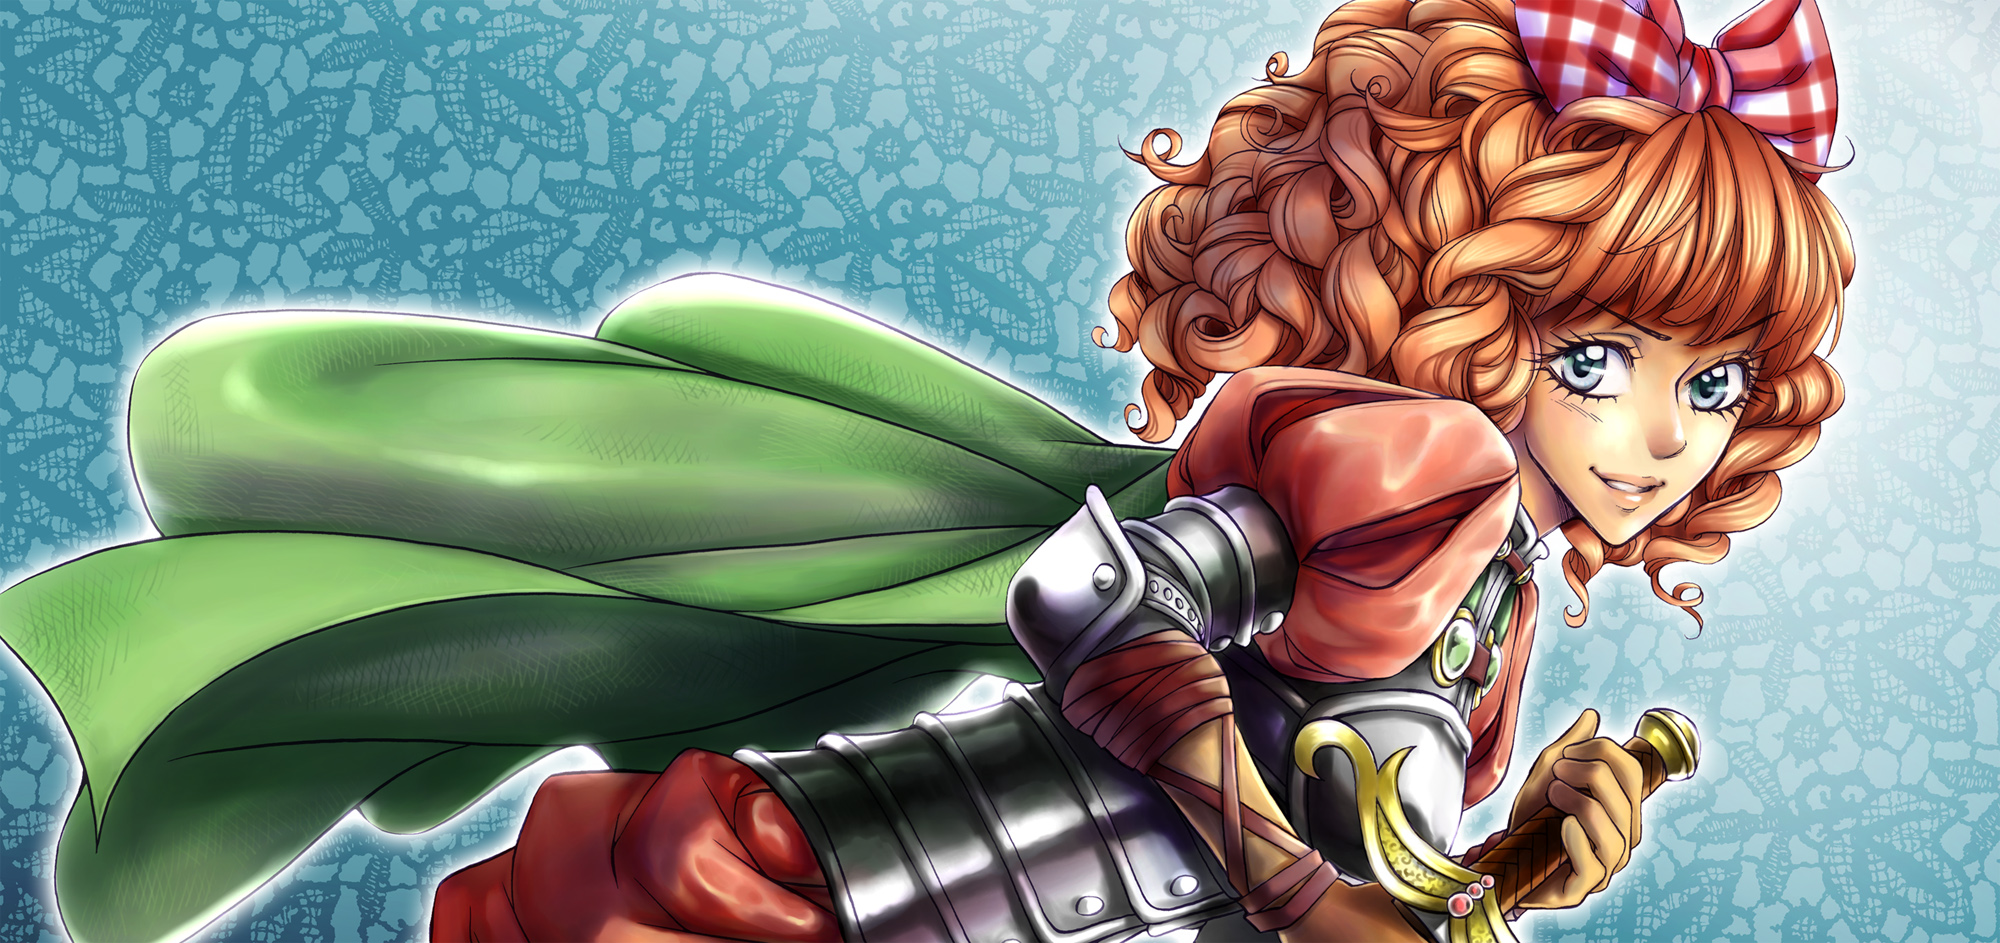 Sword Princess Amaltea - a fantasy manga where women rule